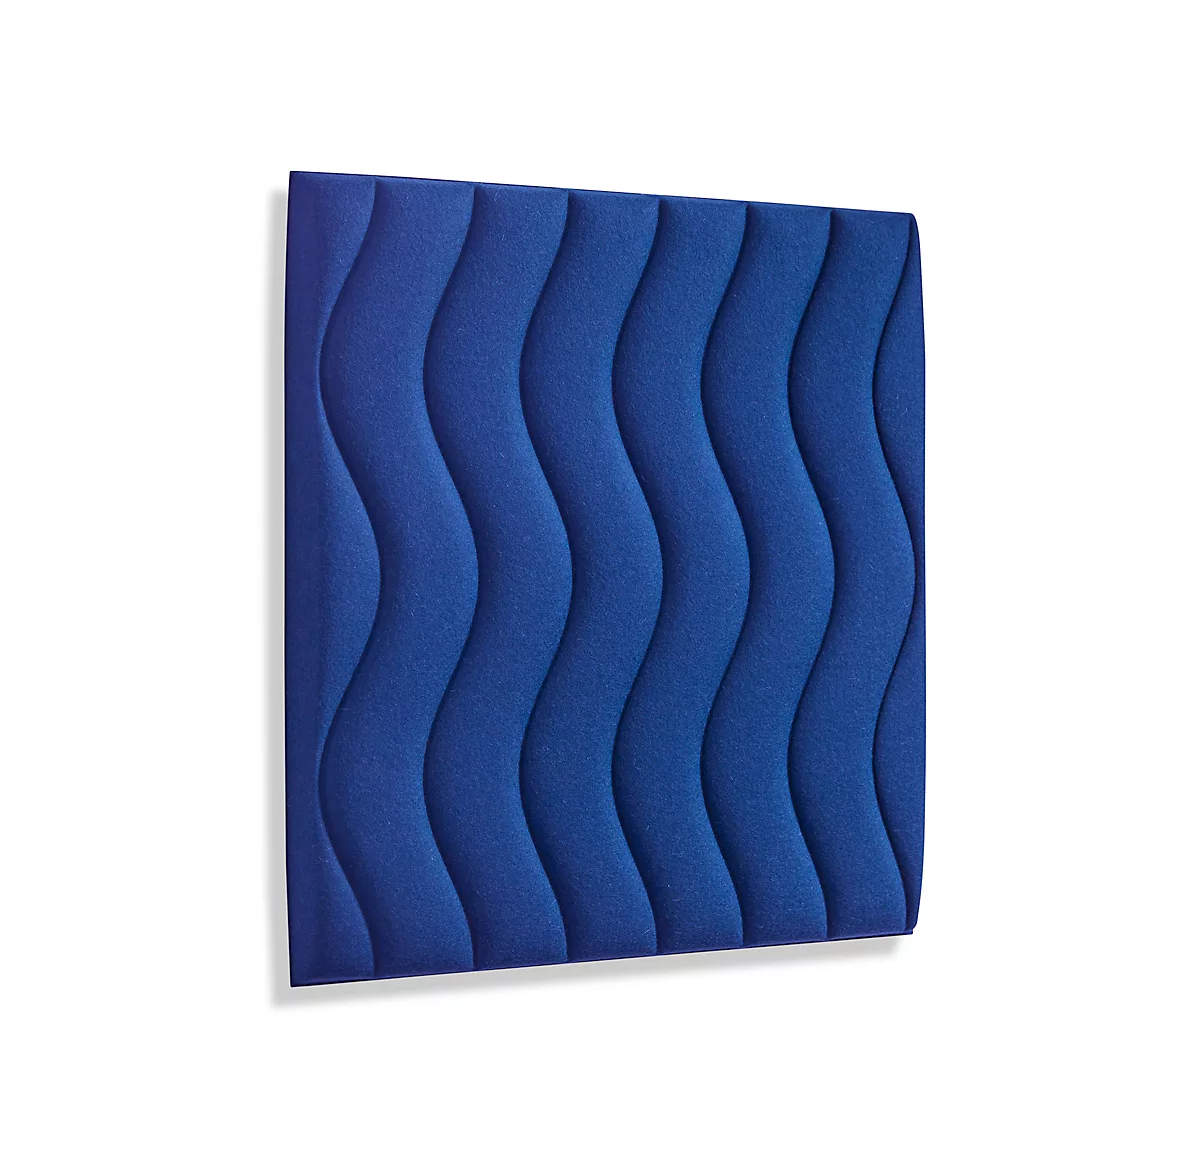 Wandpaneele m. Magnetbefestigung, B 604 x T 604 x H 47 mm, versch. Waves-Design, azurblau